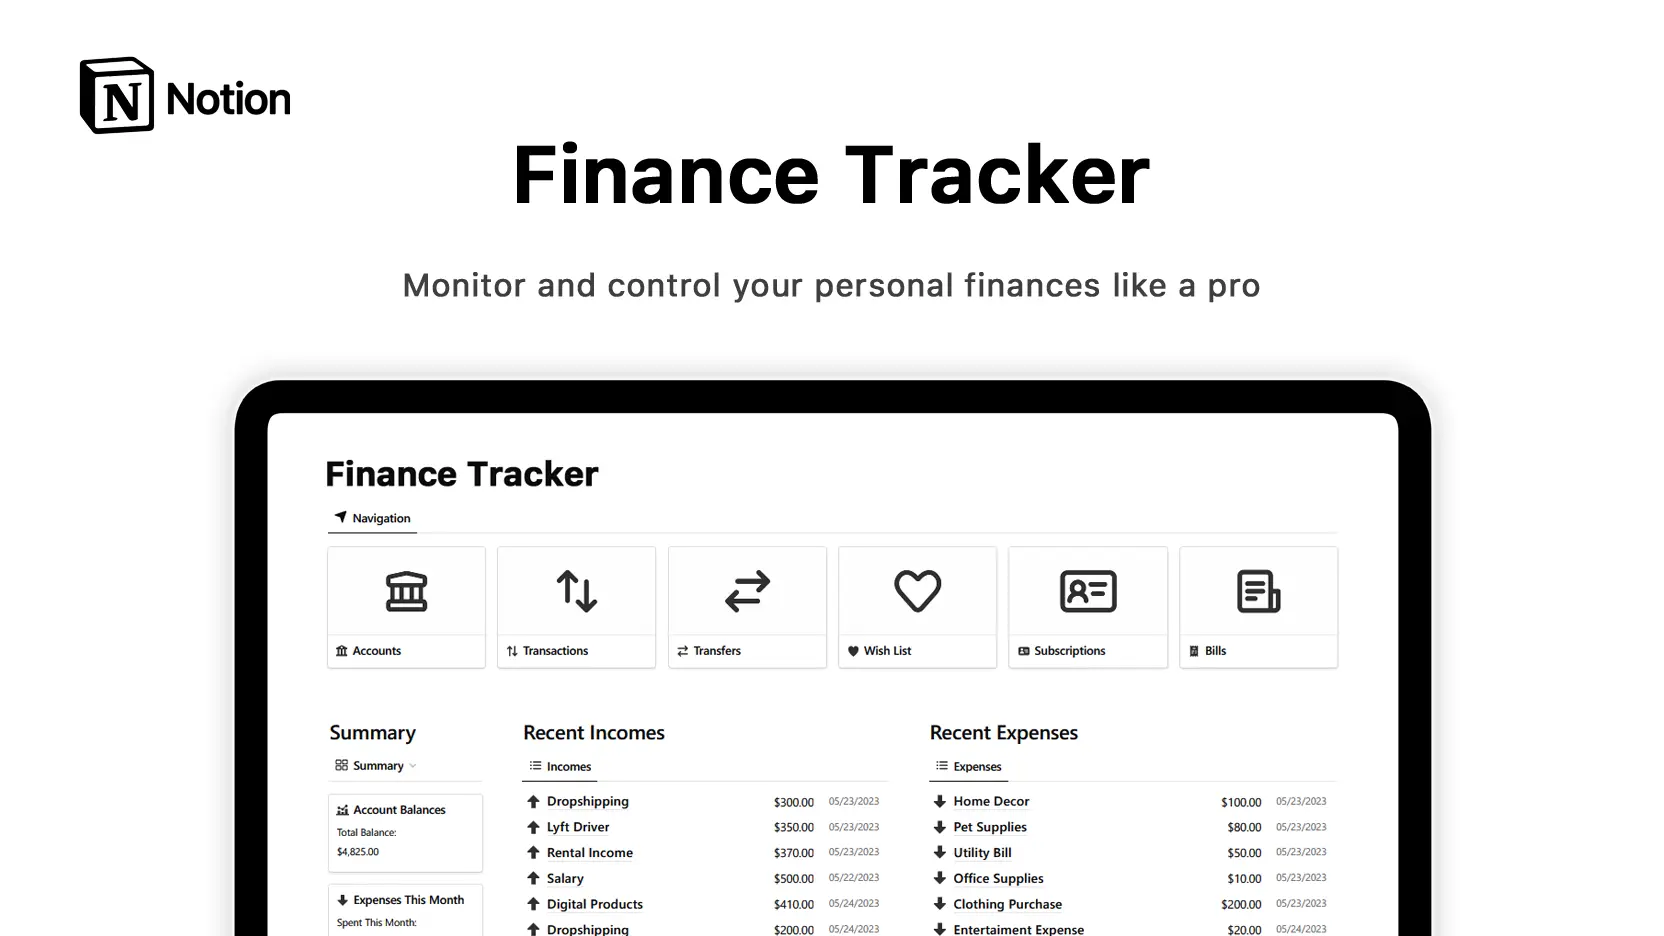 Finance Tracker image